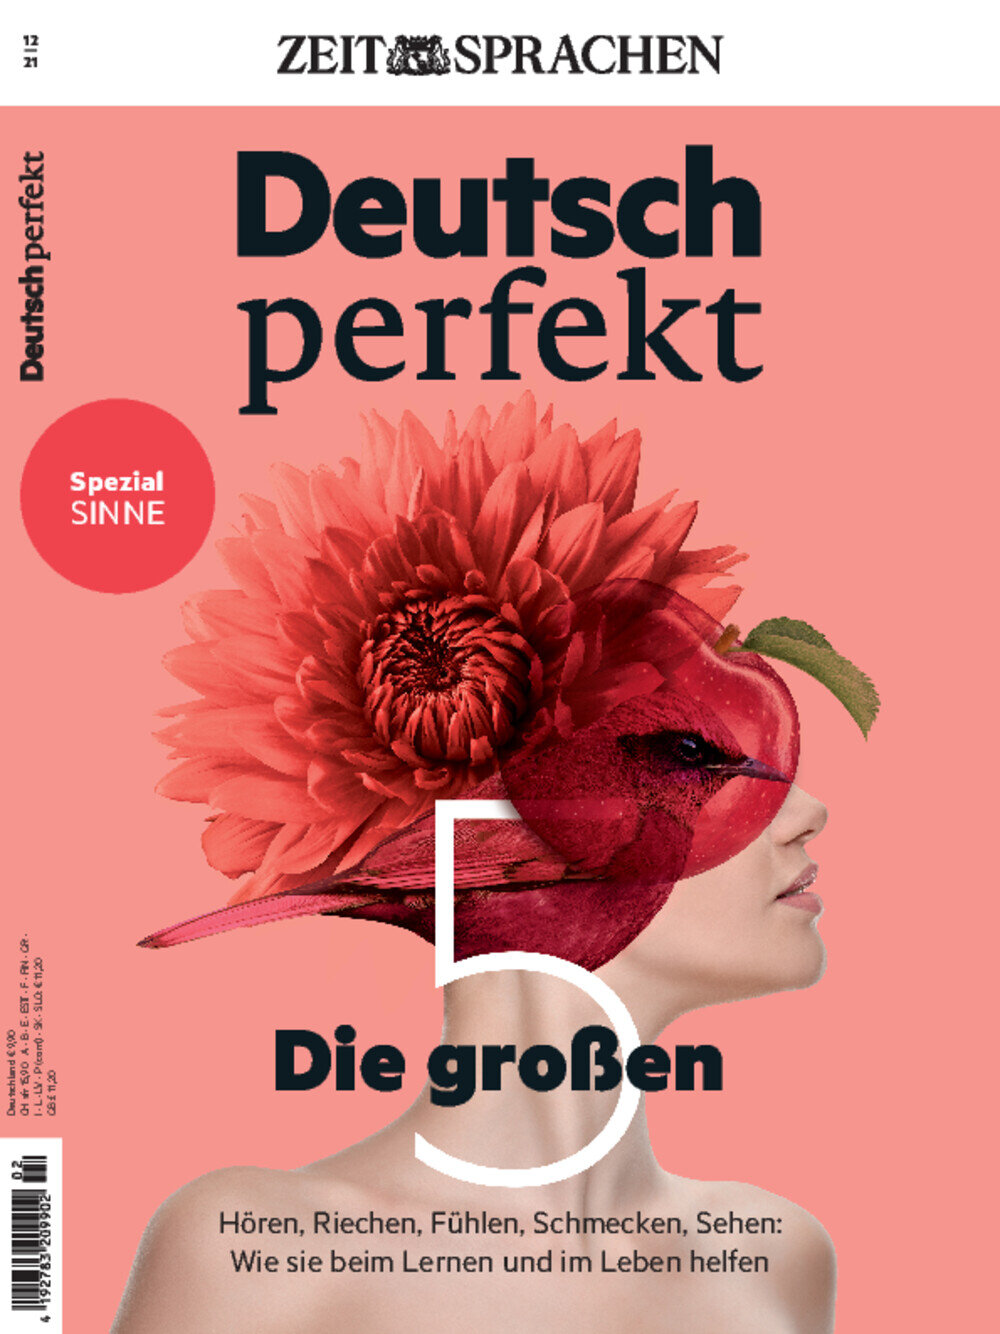 Deutsch perfekt ePaper 12/2021